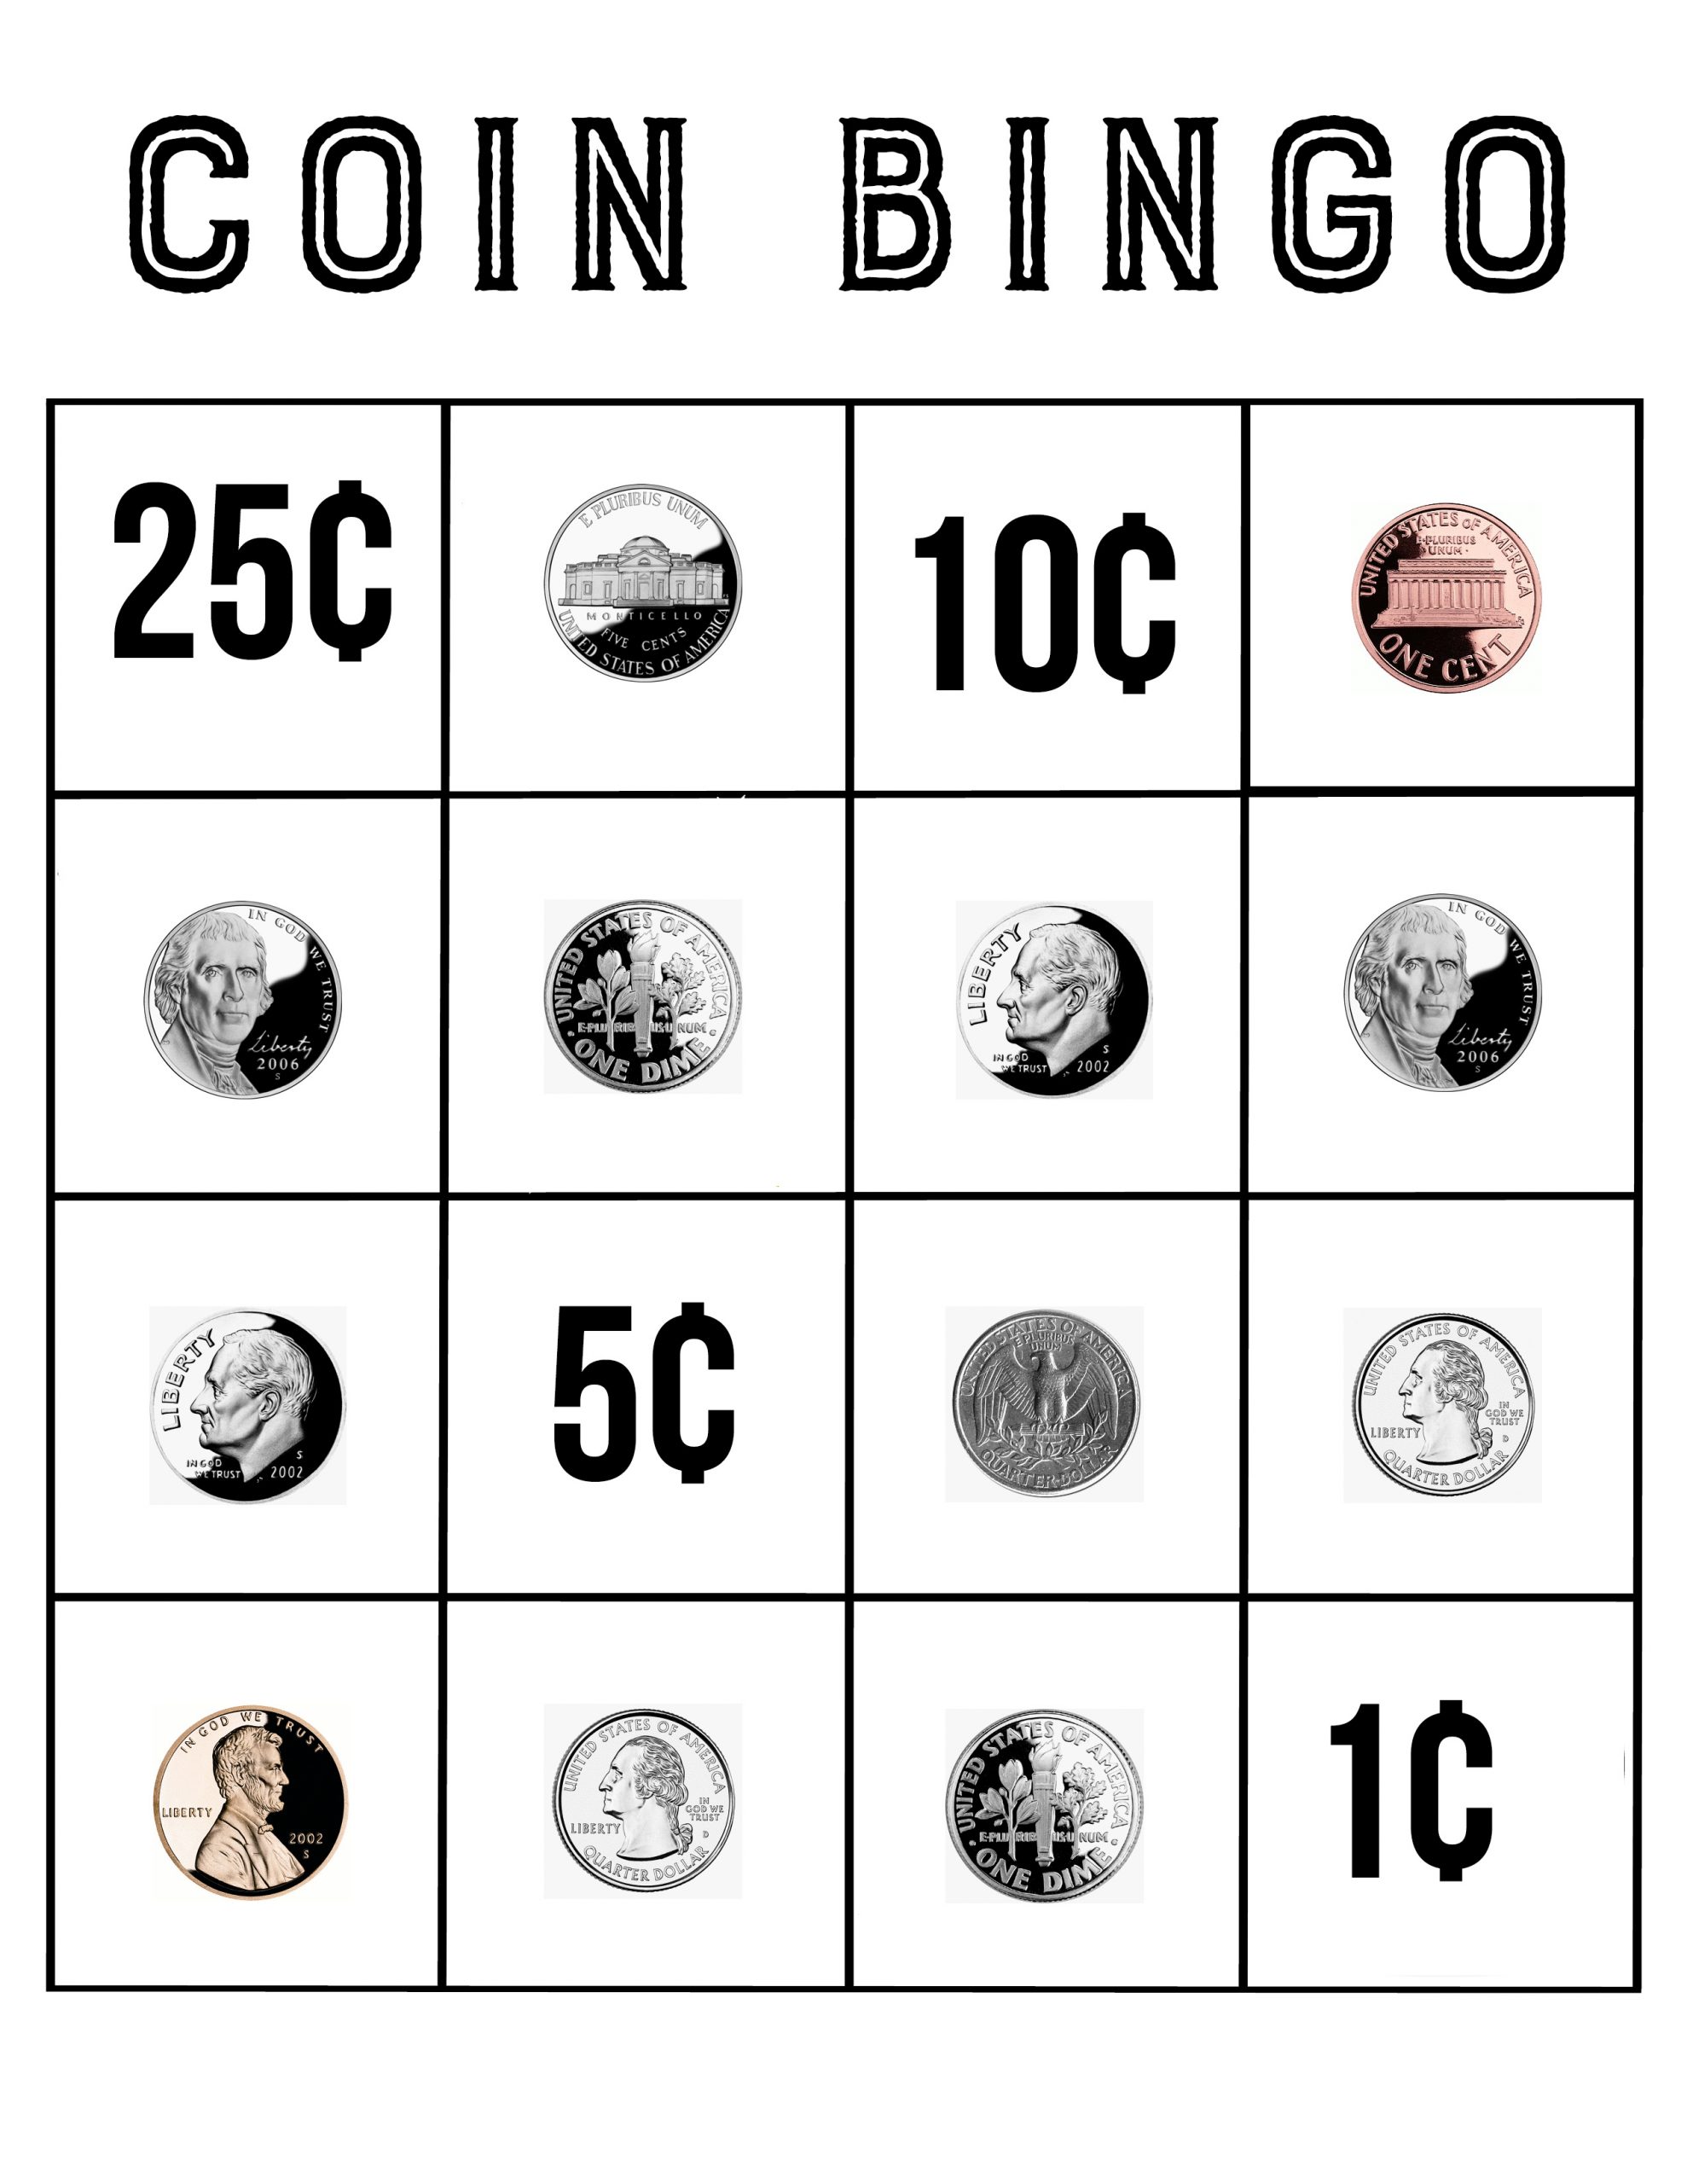 Coin Bingo Free Printable - The Crafting Chicks